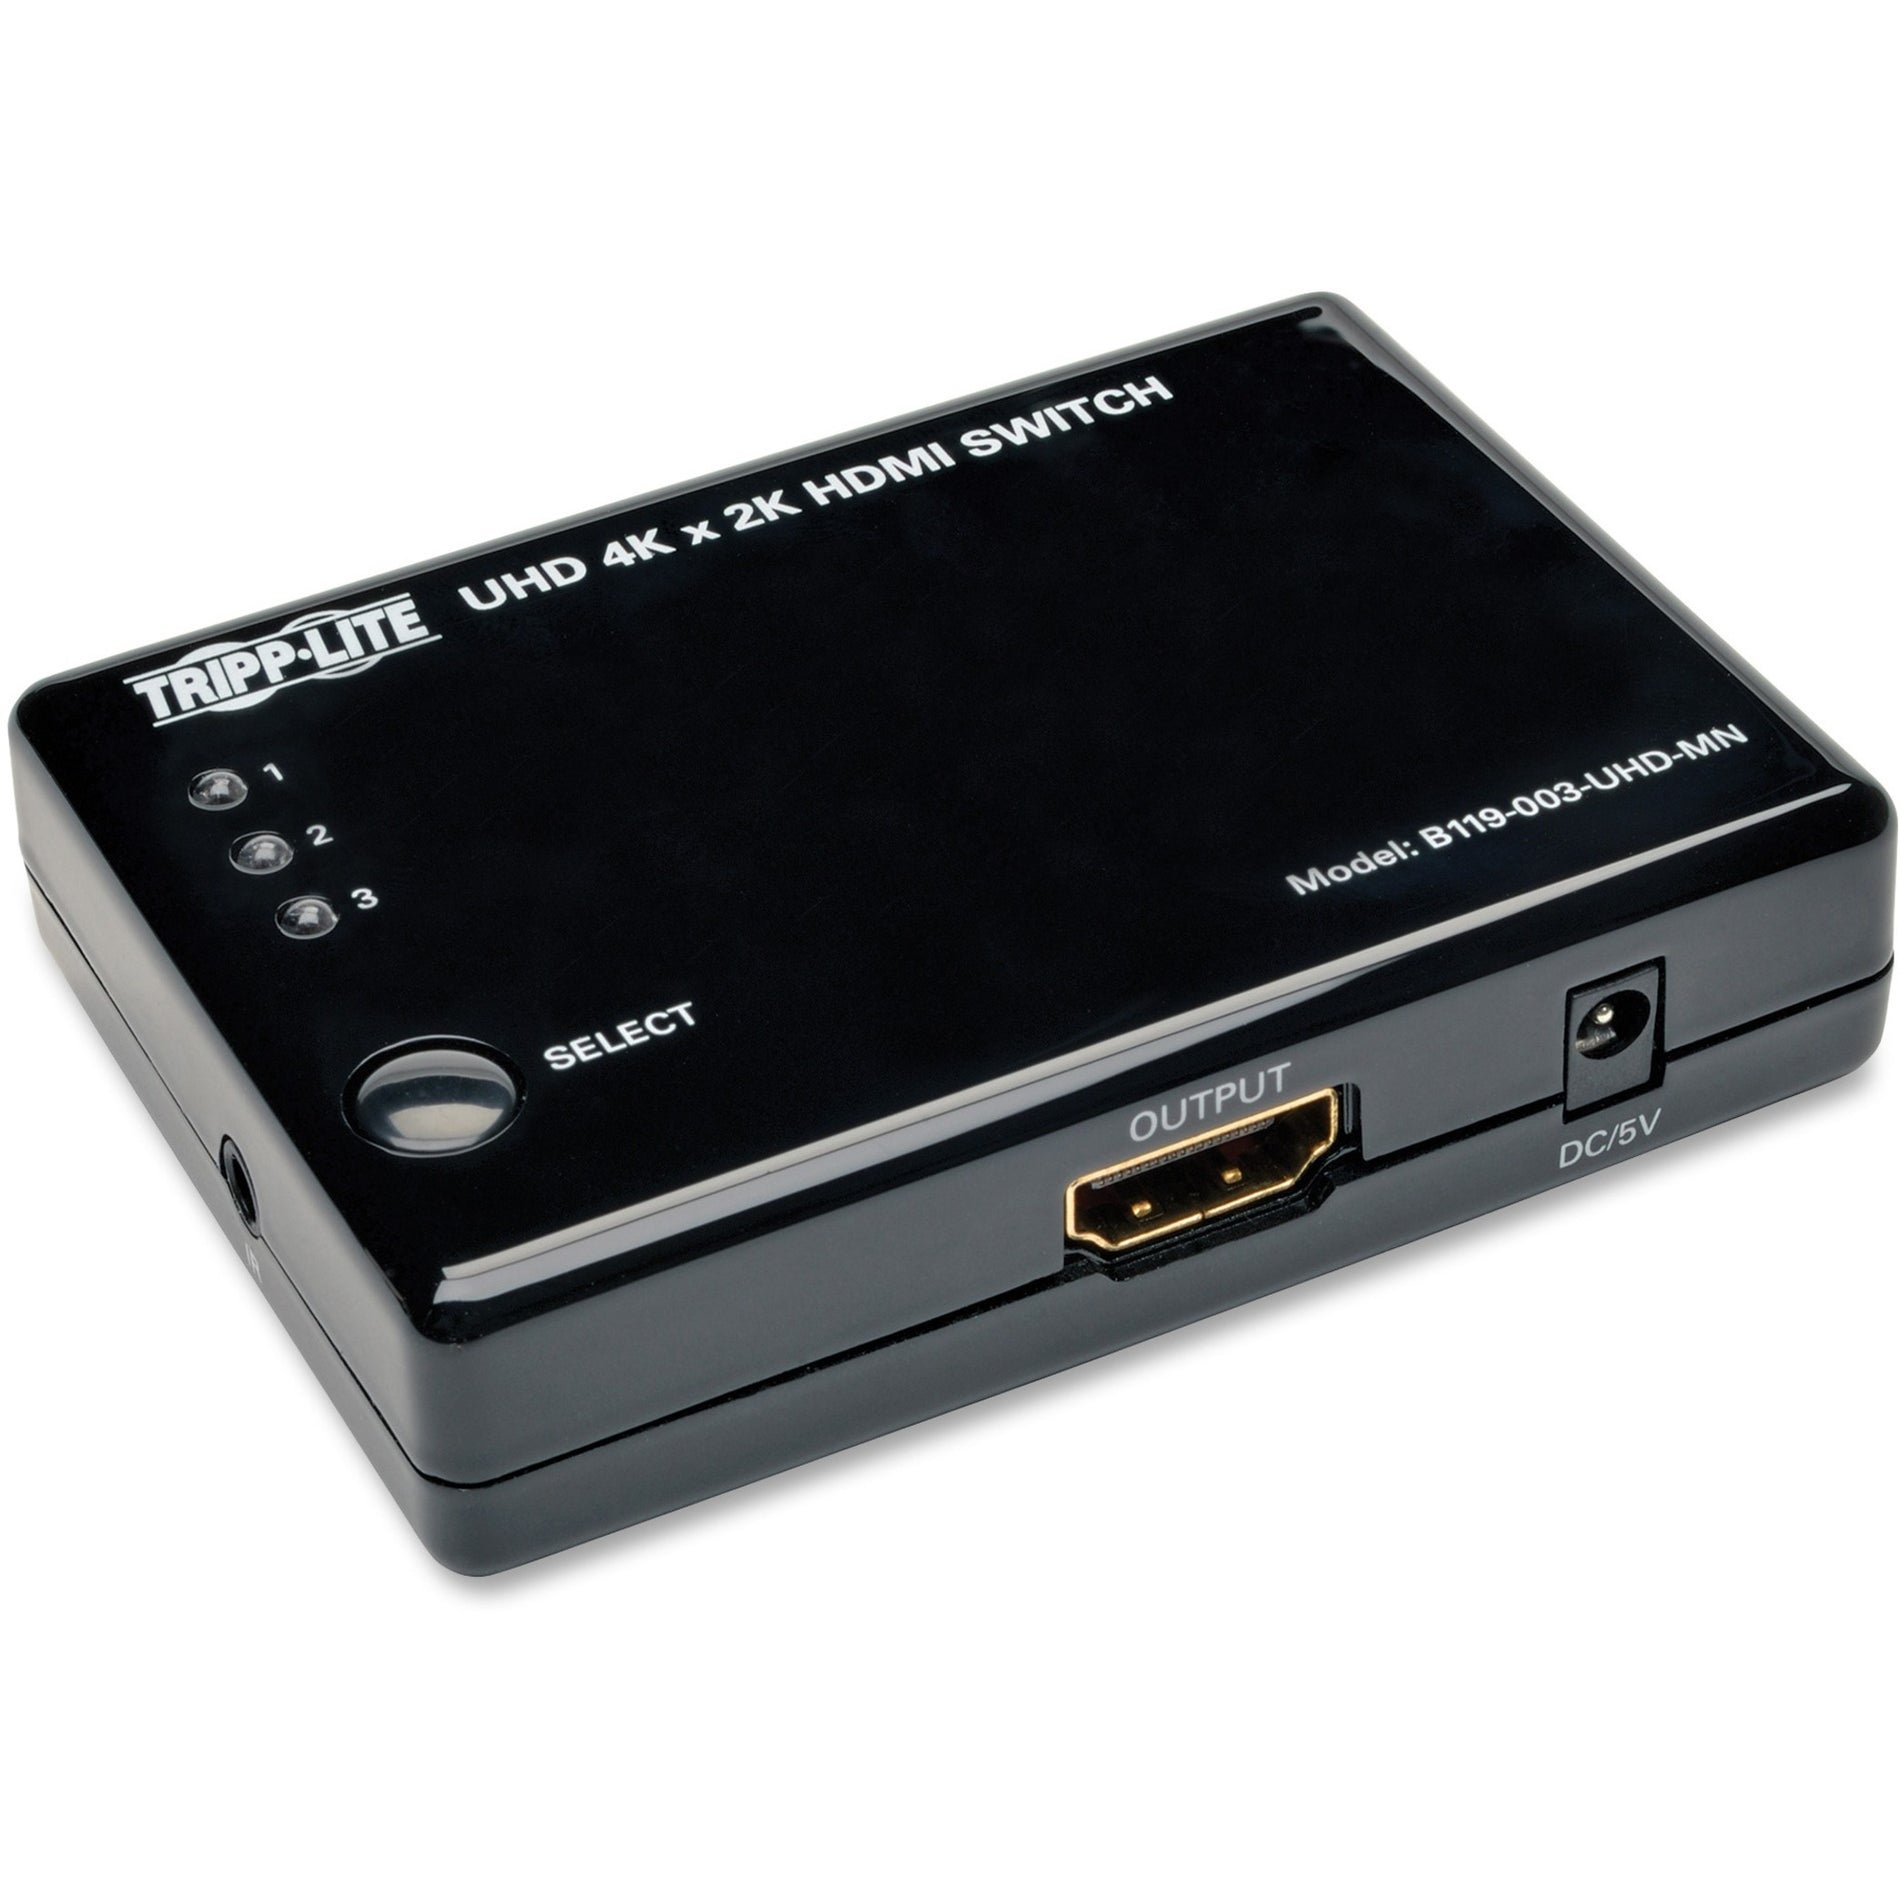 Tripp Lite B119-003-UHD-MN 3-Port HDMI Mini Switch, Black - 4K Video, Remote Control